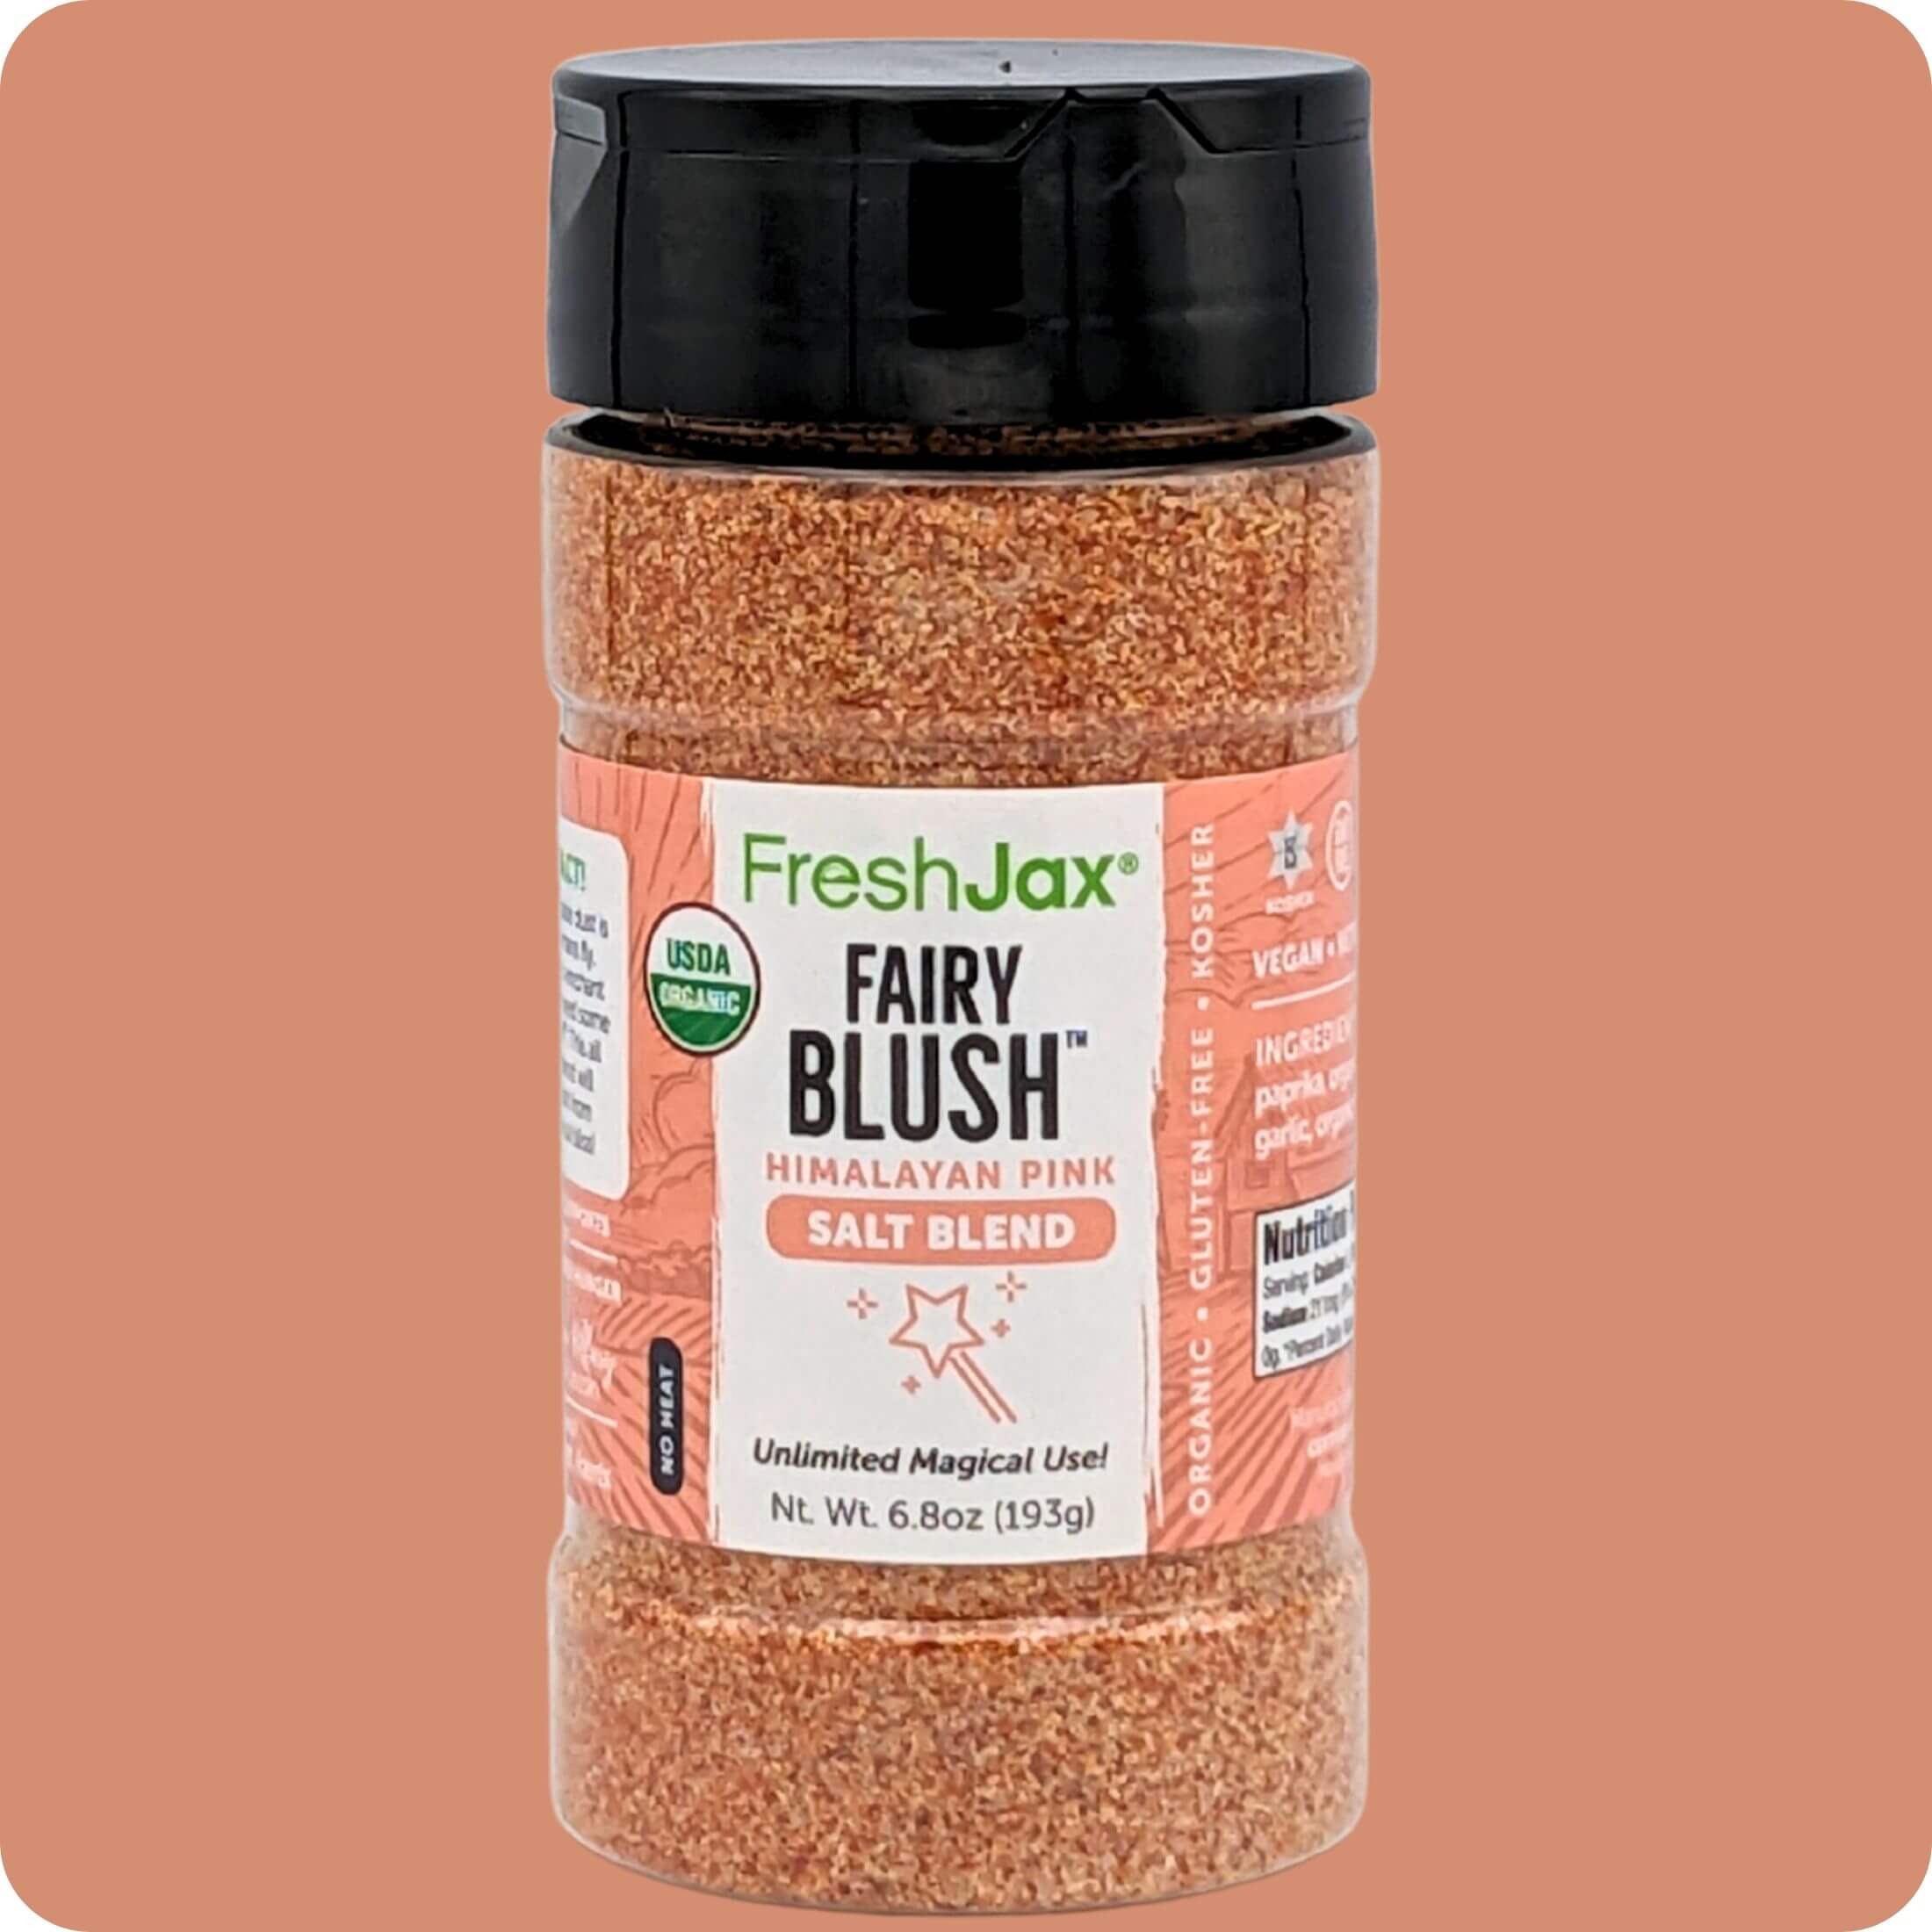 FreshJax Organic Spices Fairy Blush Himalayan Pink Salt Blend